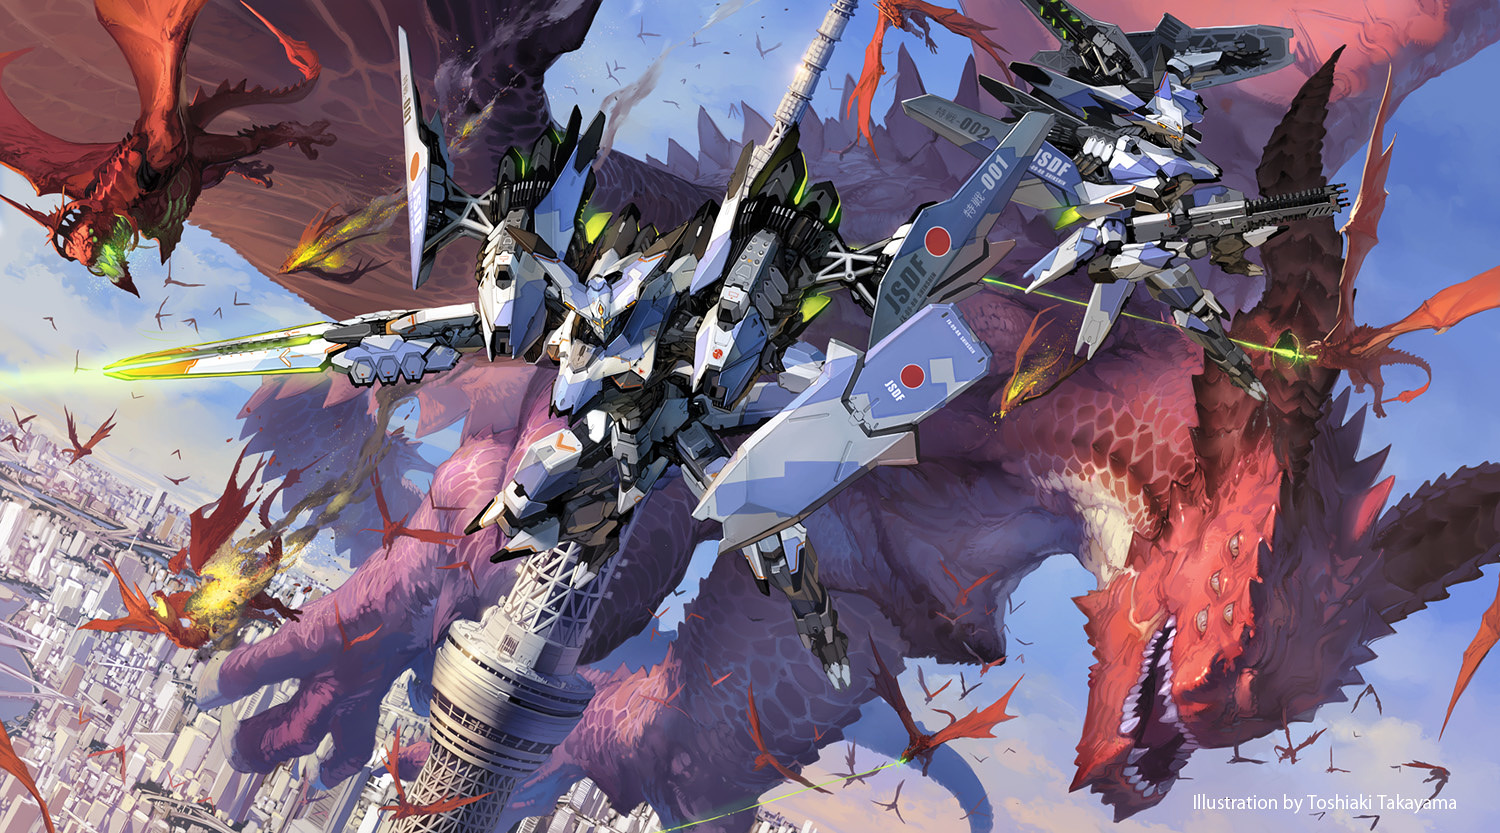 Robot Mecha Fight Mech War Fantasy Art Concept Art Toshiaki Takayama 1500x833